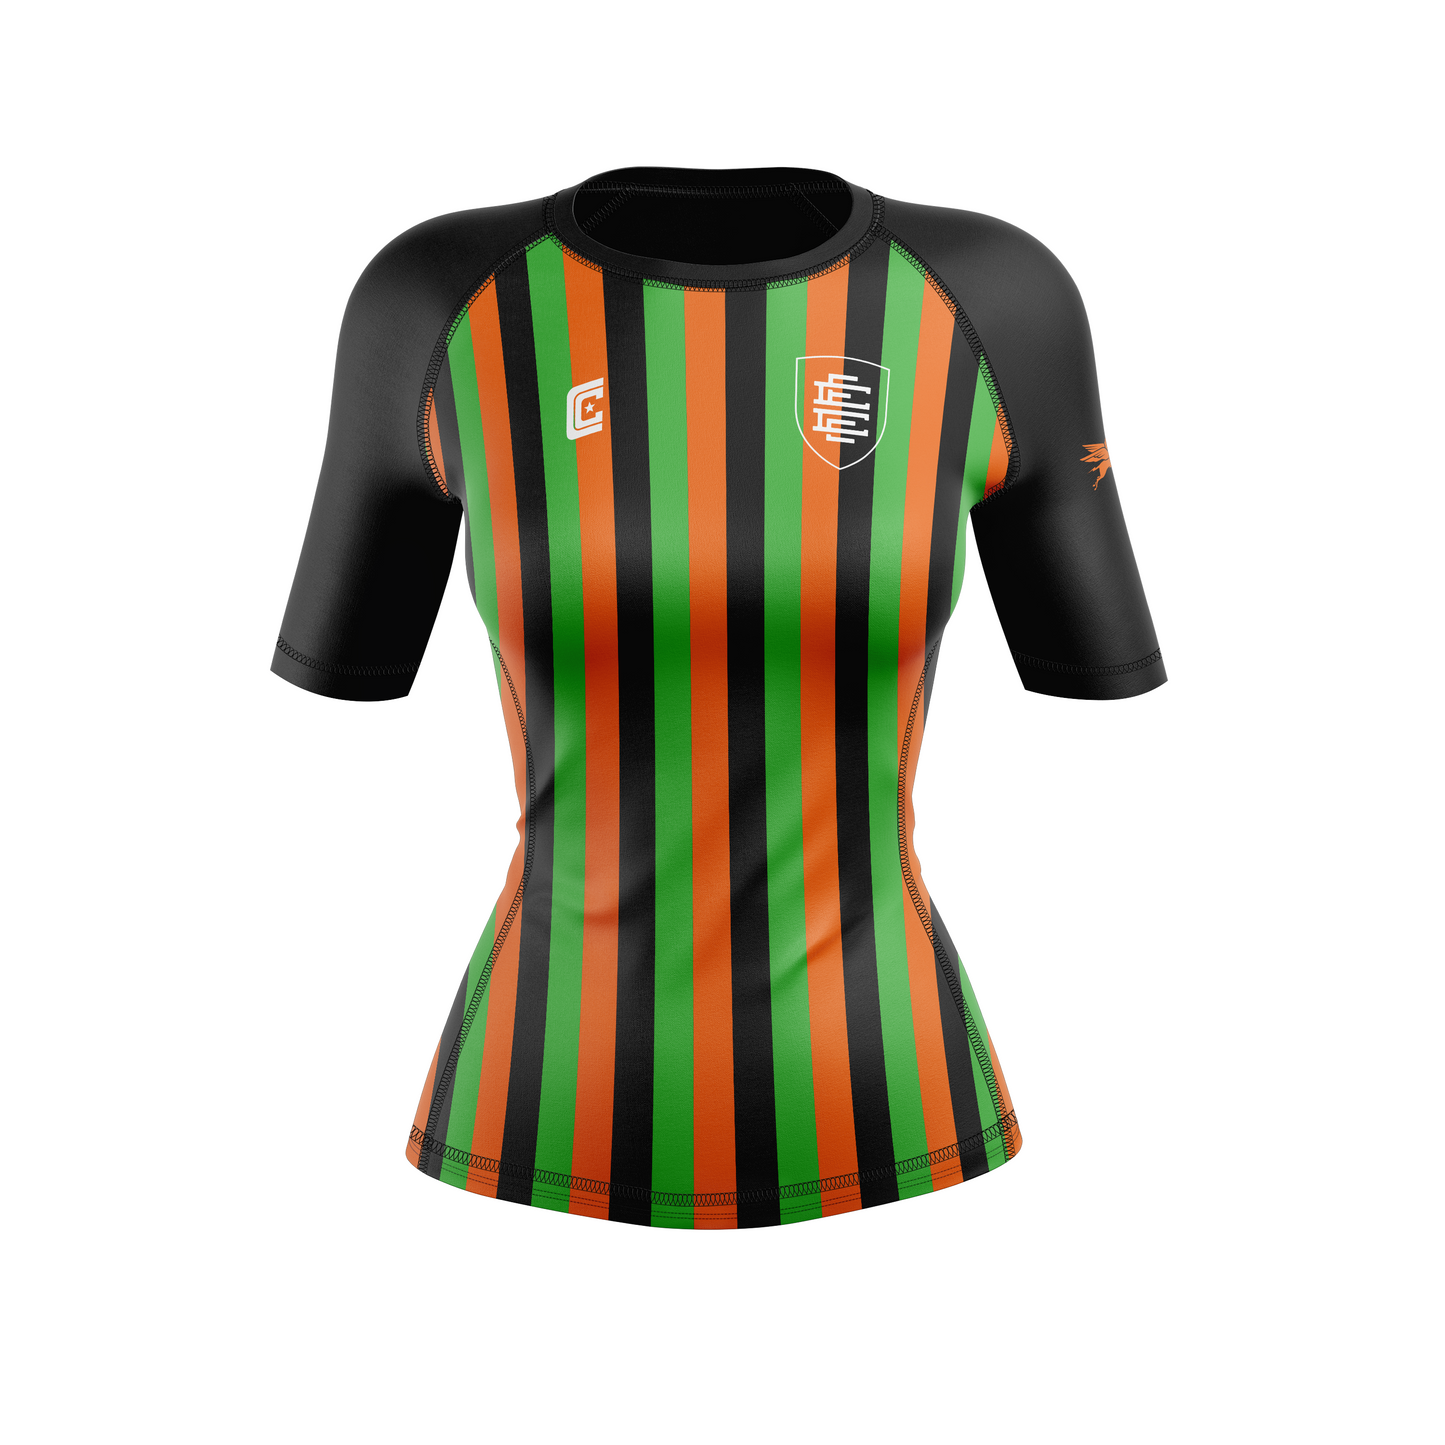 CCFC women's rash guard Golciaga United, black orange and green